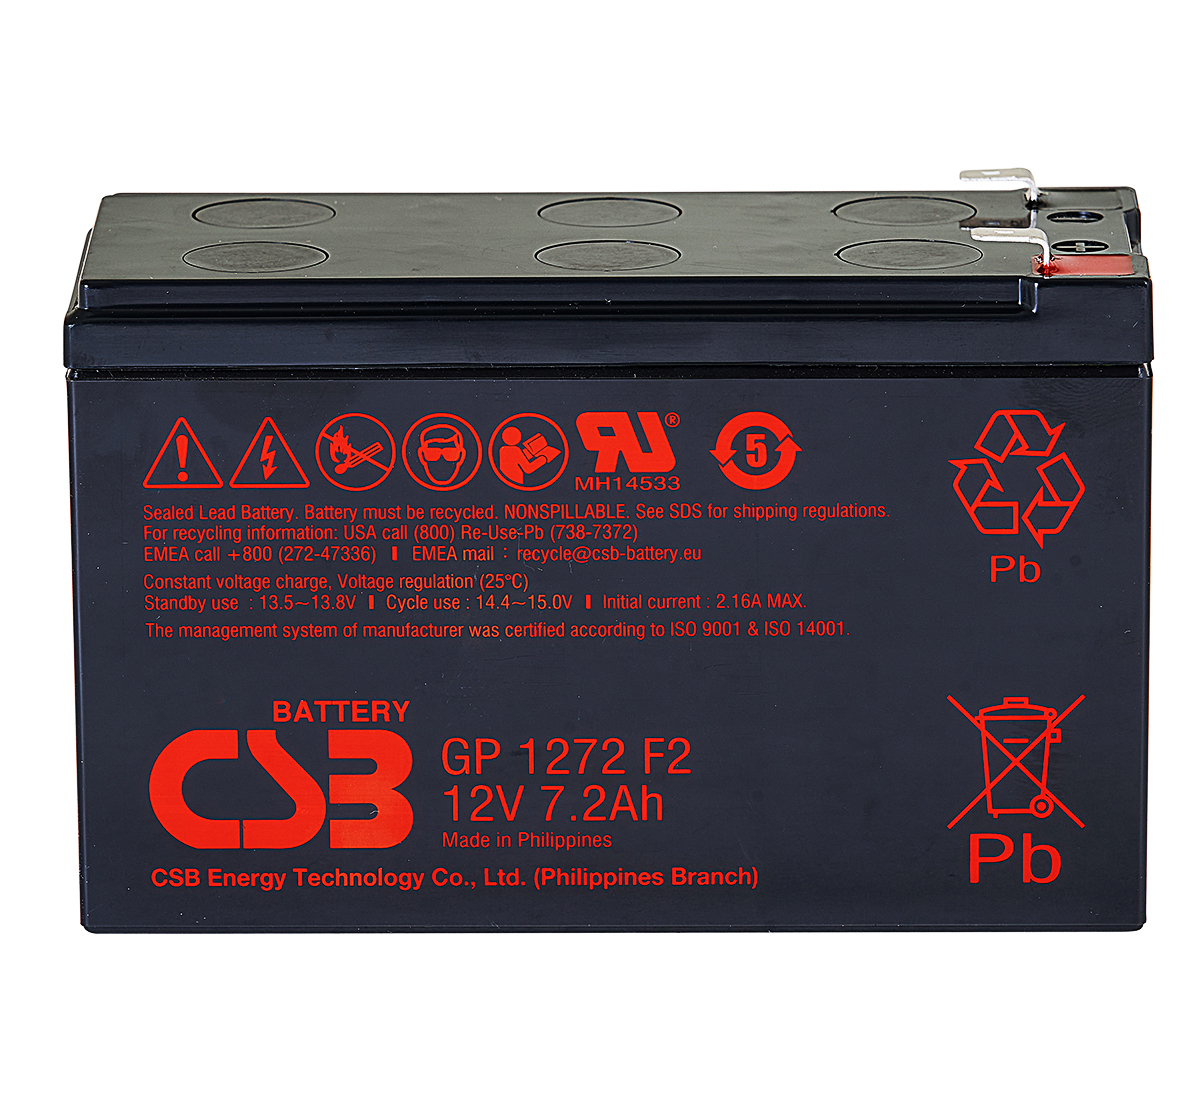 MDSV210 UPS Battery Kit - Replaces APC RBCV210